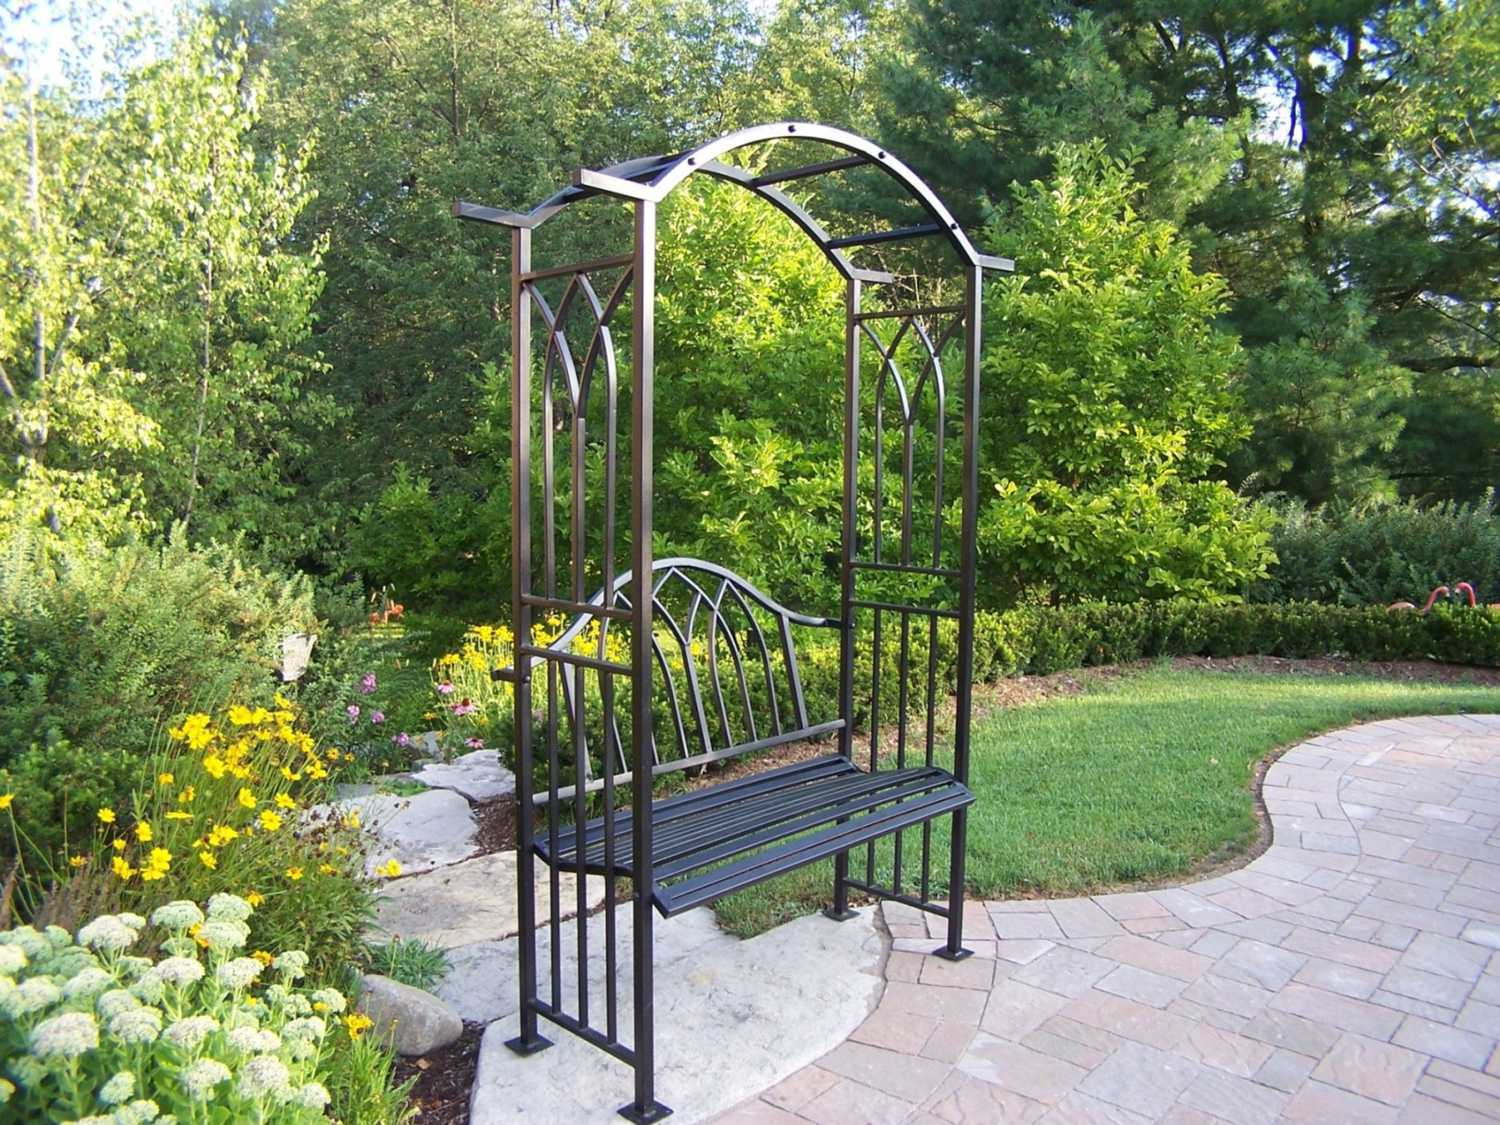 арка кованая садовая со скамейкой